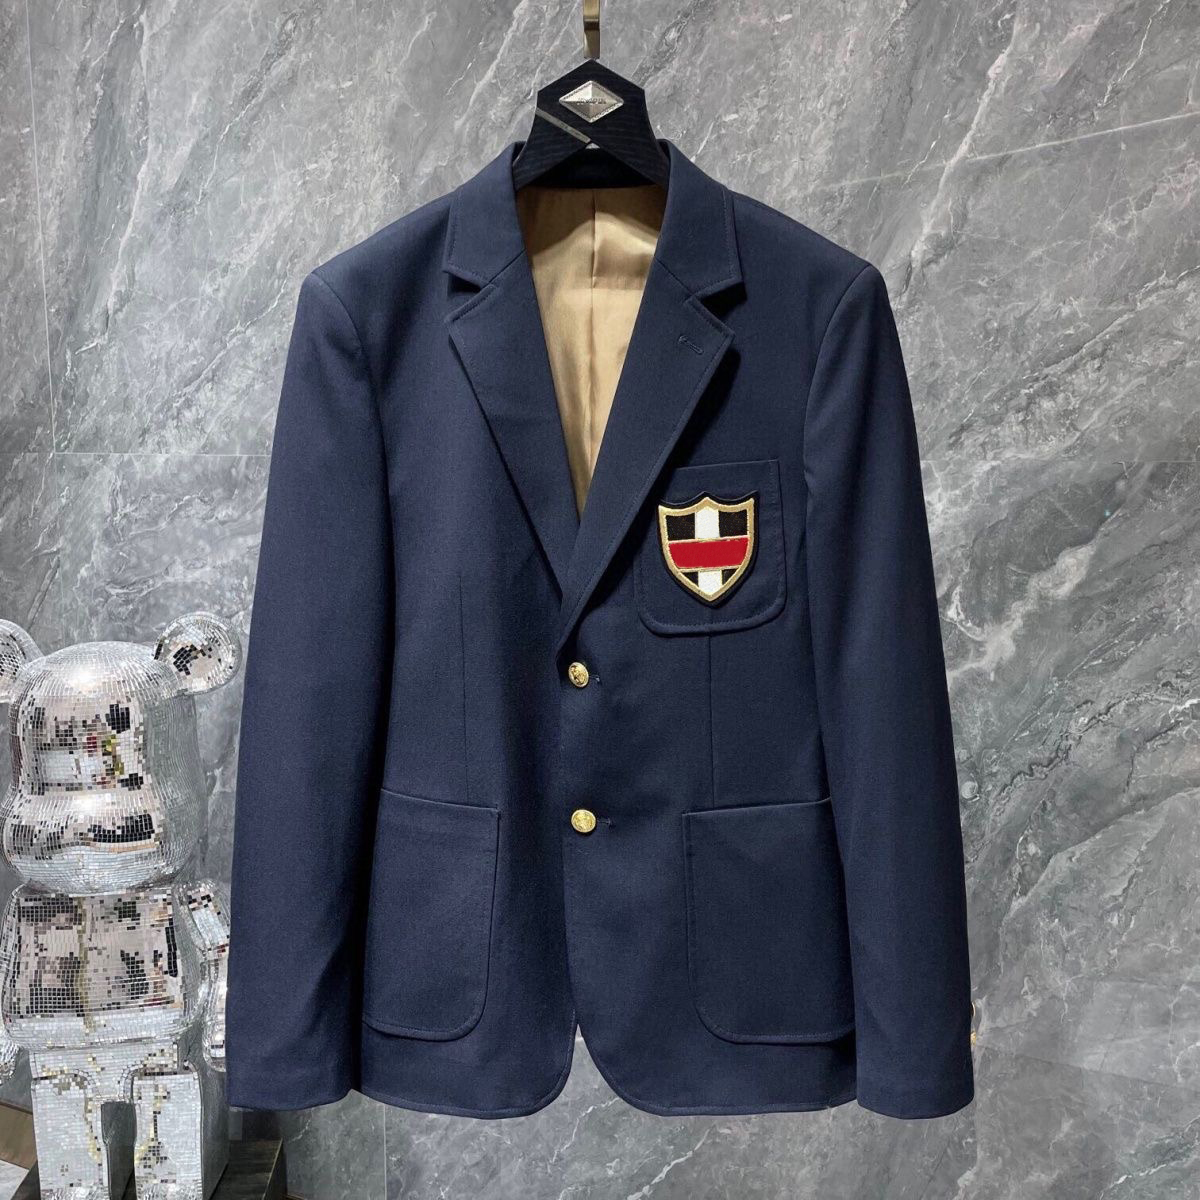 Designer Men Blazer jacket Coat Business Casual Slim Fit Formal Suit Blazers Men Suits Embroidery badge top pant